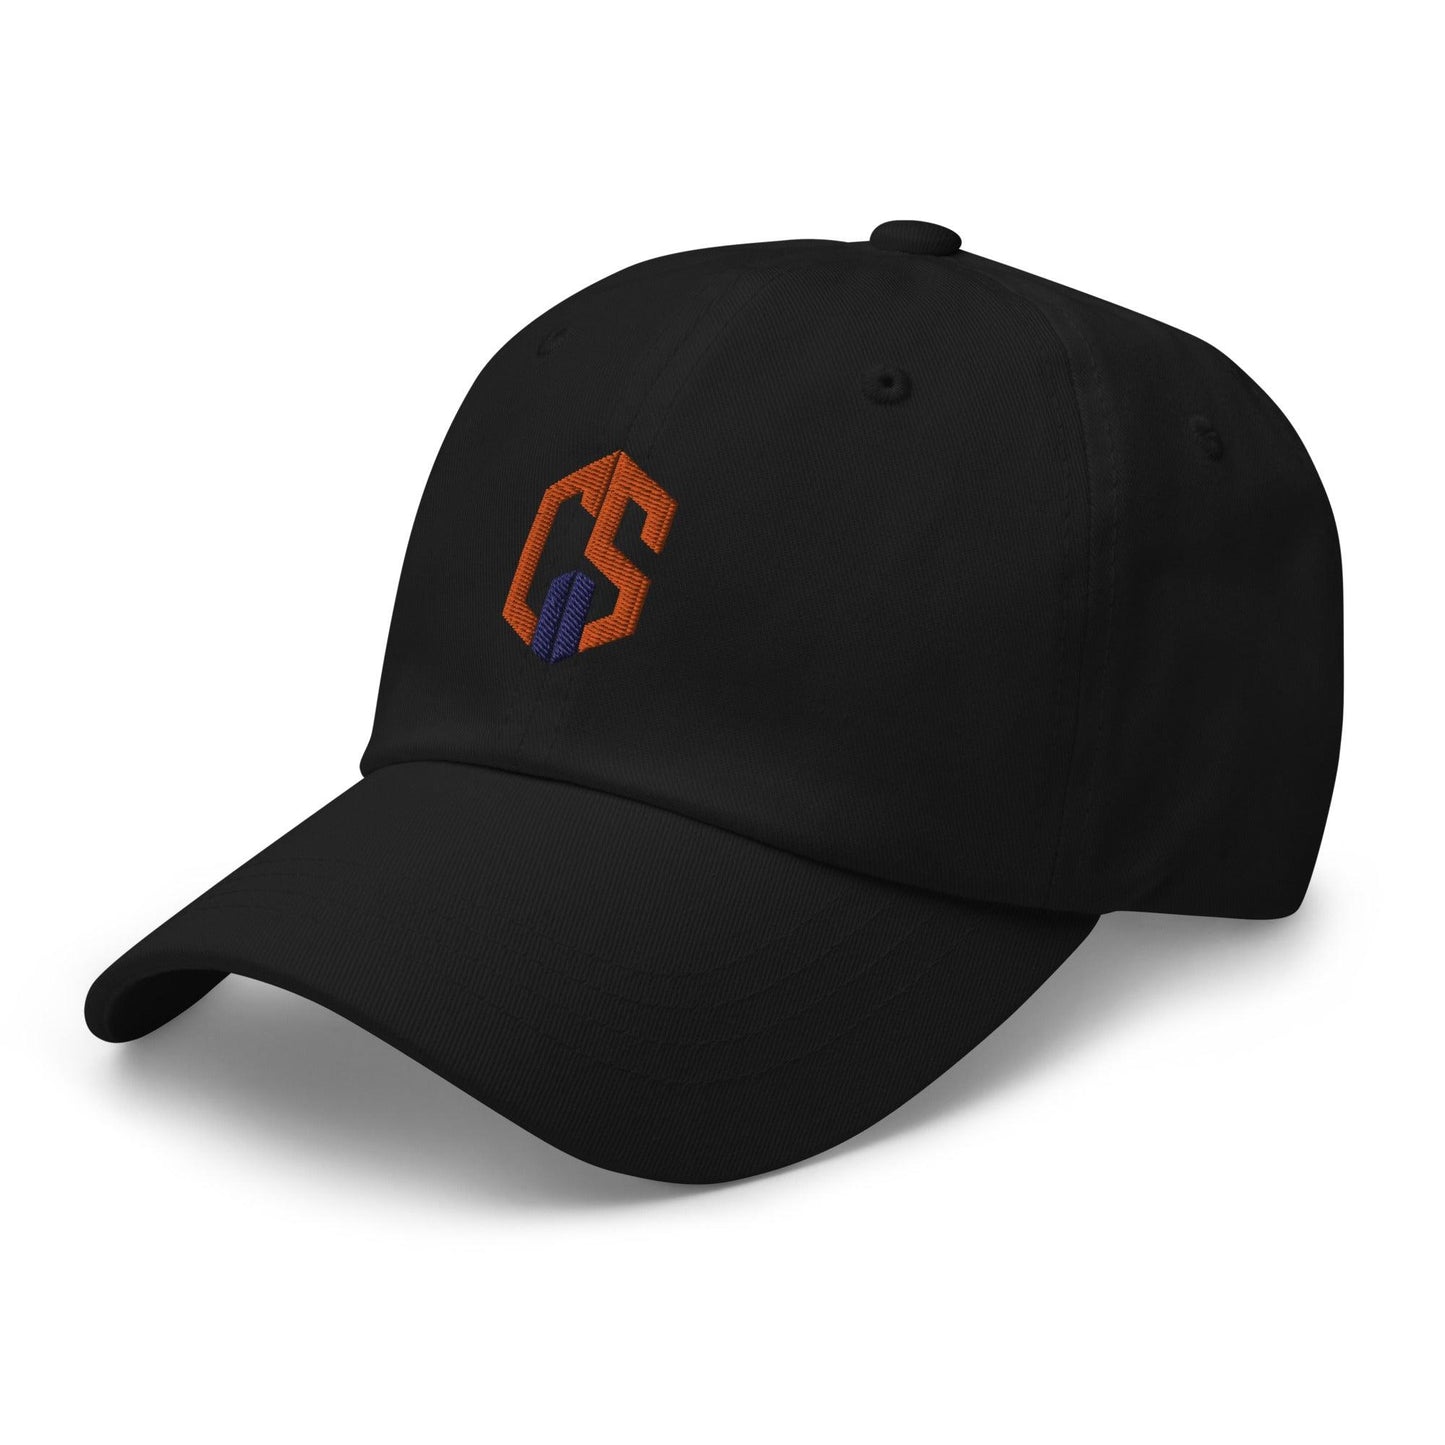 Casey Saucke II “Signature” hat - Fan Arch